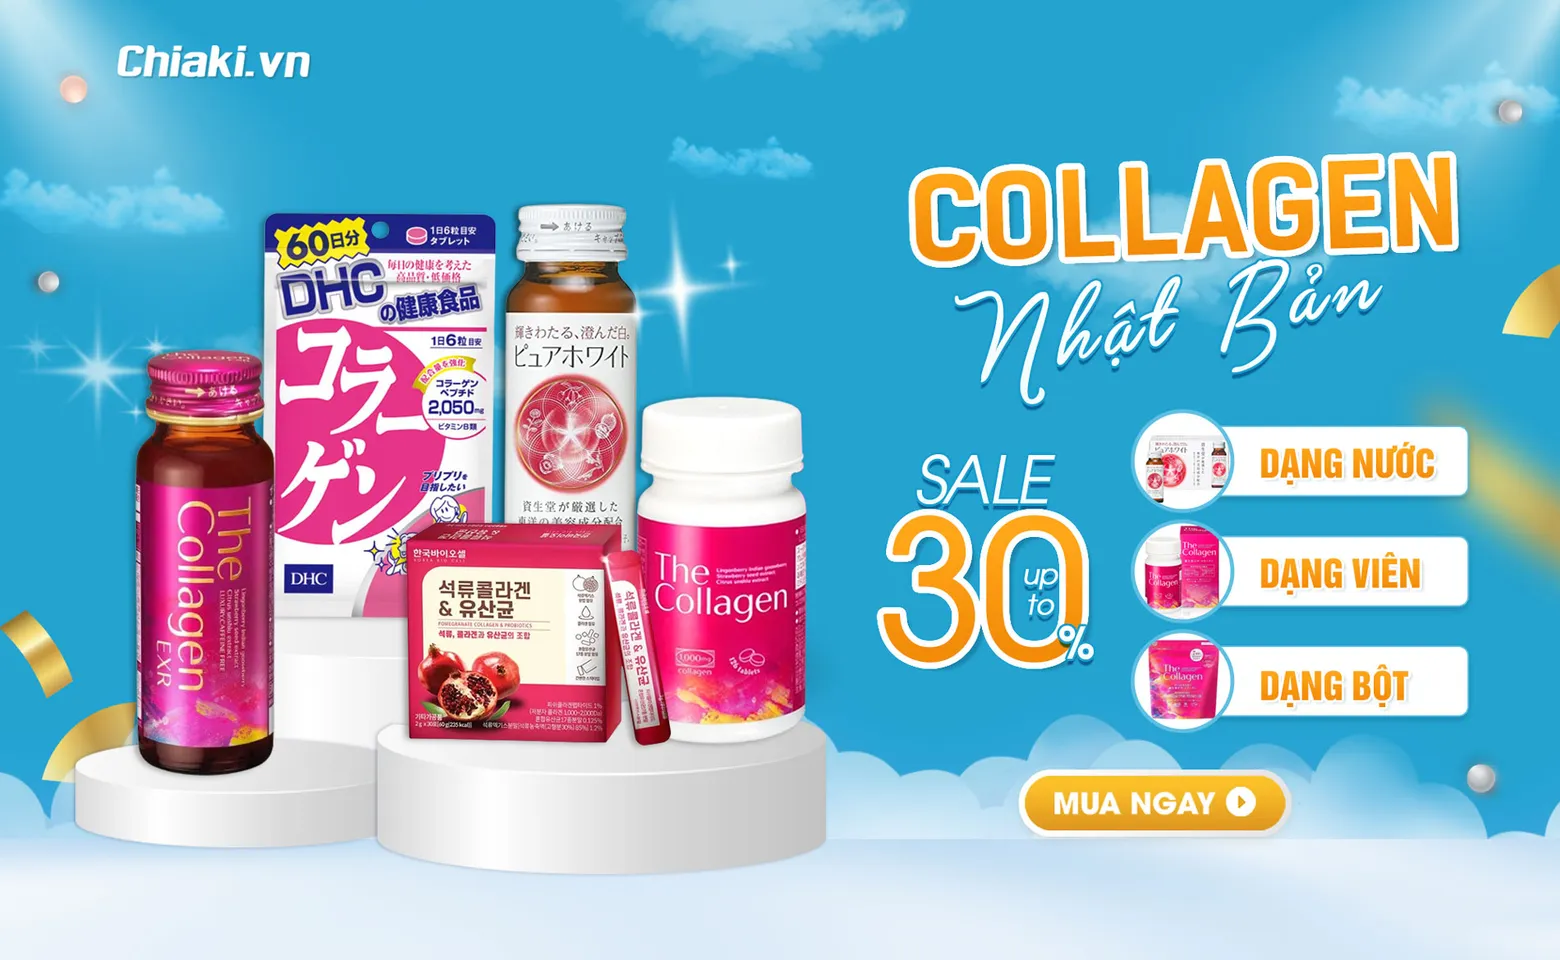 Chiaki Sale Collage Nhật Bản Up to 30%